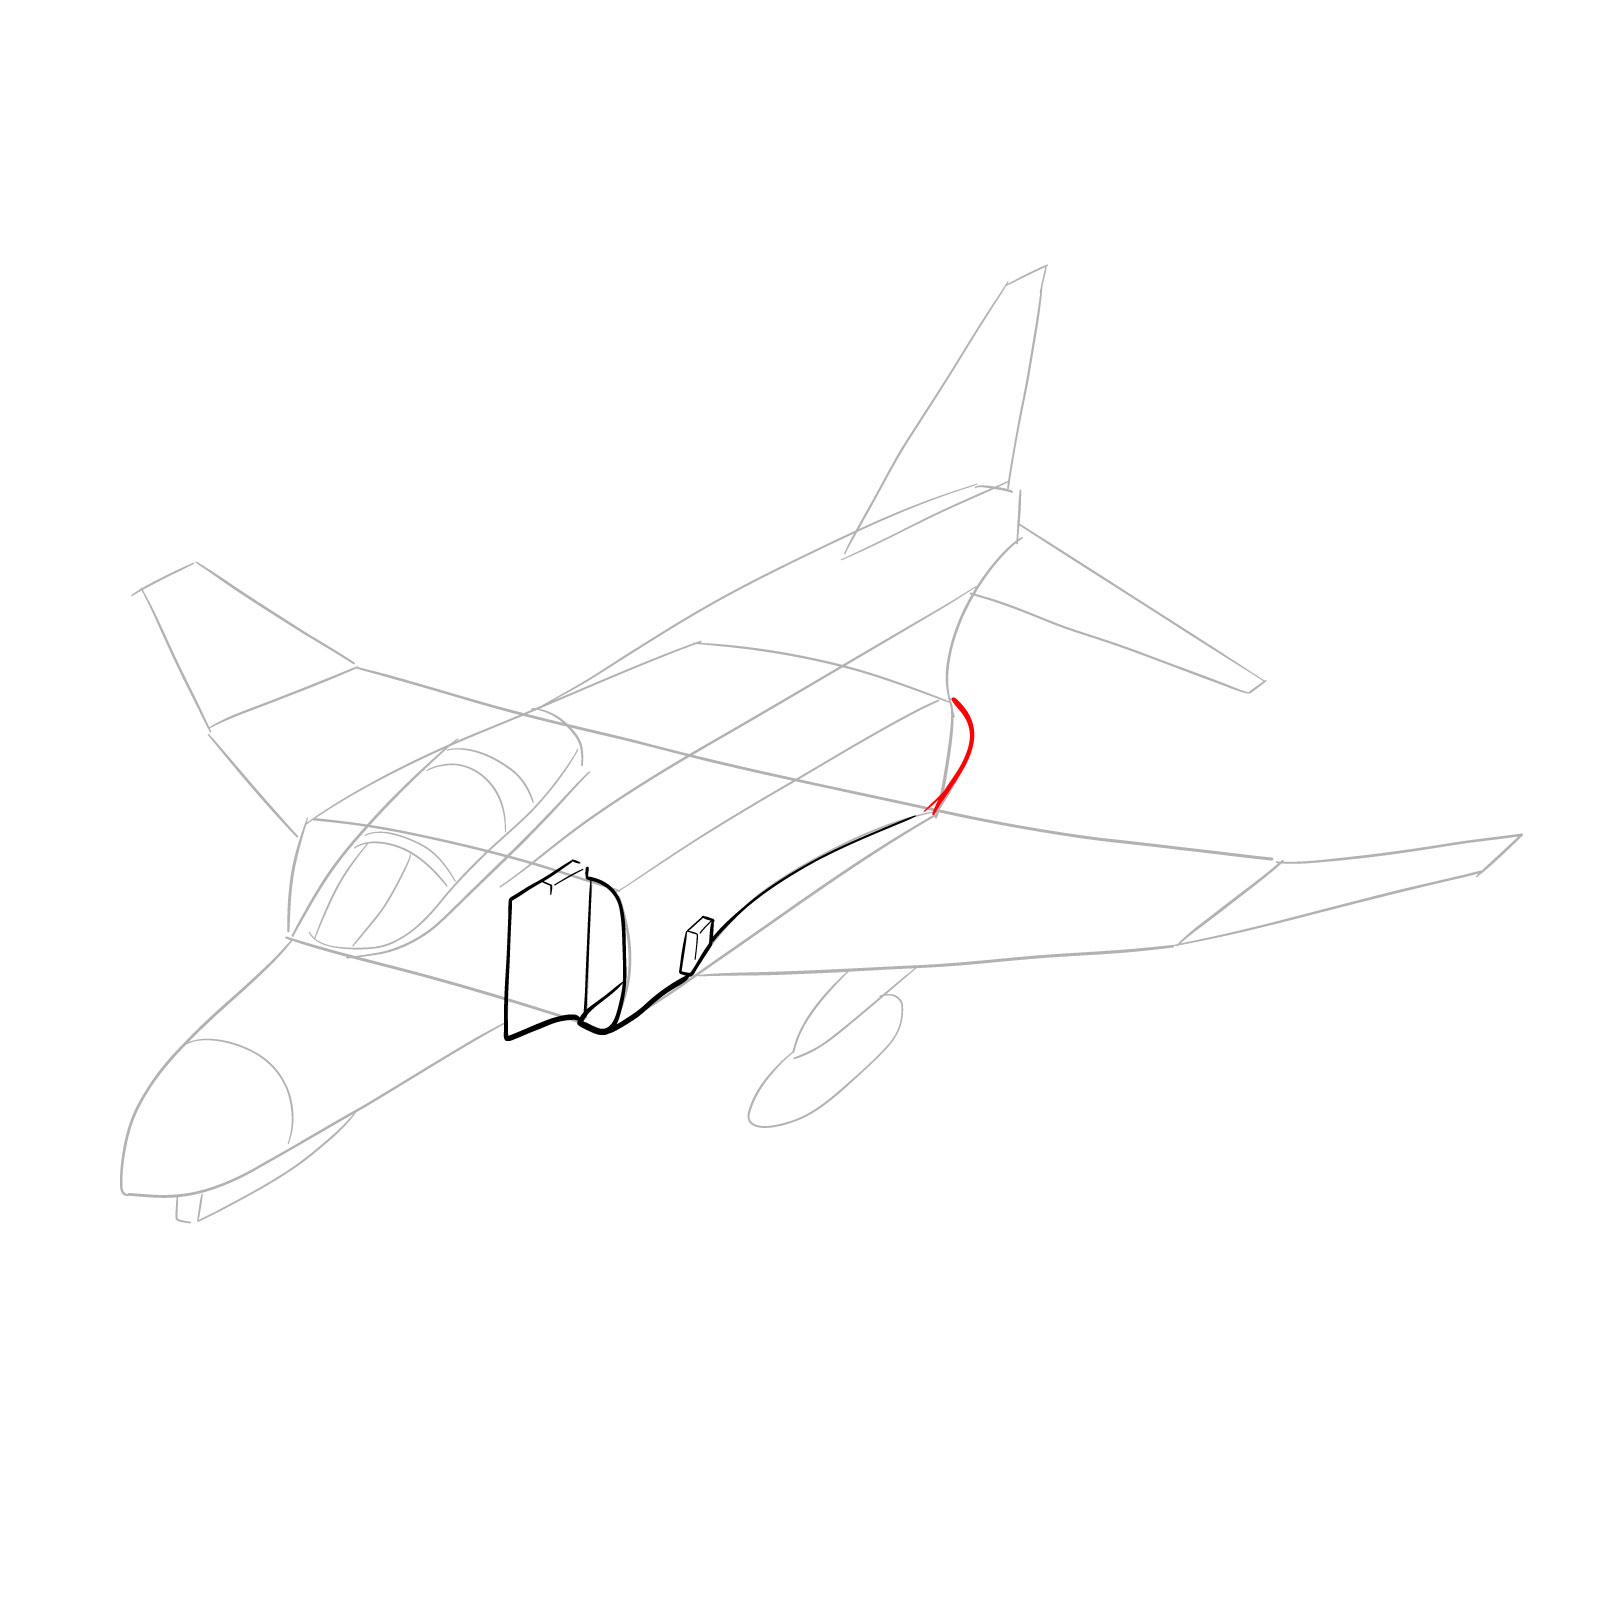 How to draw McDonnell Douglas F-4 Phantom II - step 10